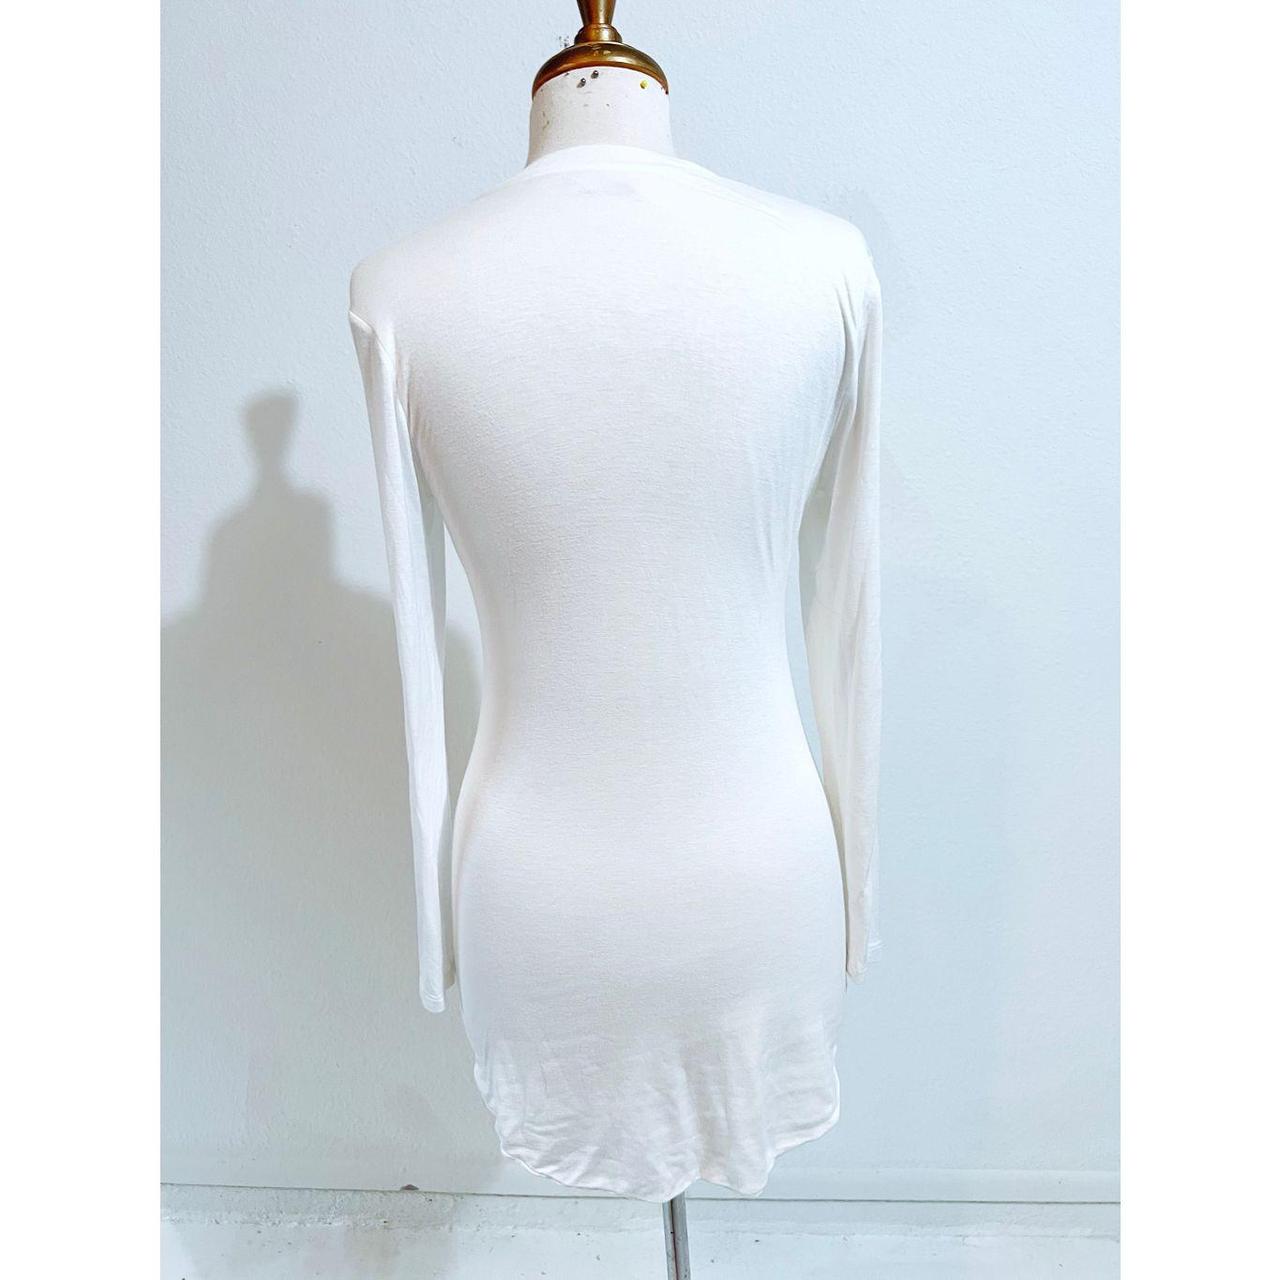 Product Image 4 - Fashion Nova White Bodycon Dress
✨✨✨✨✨✨
Simple